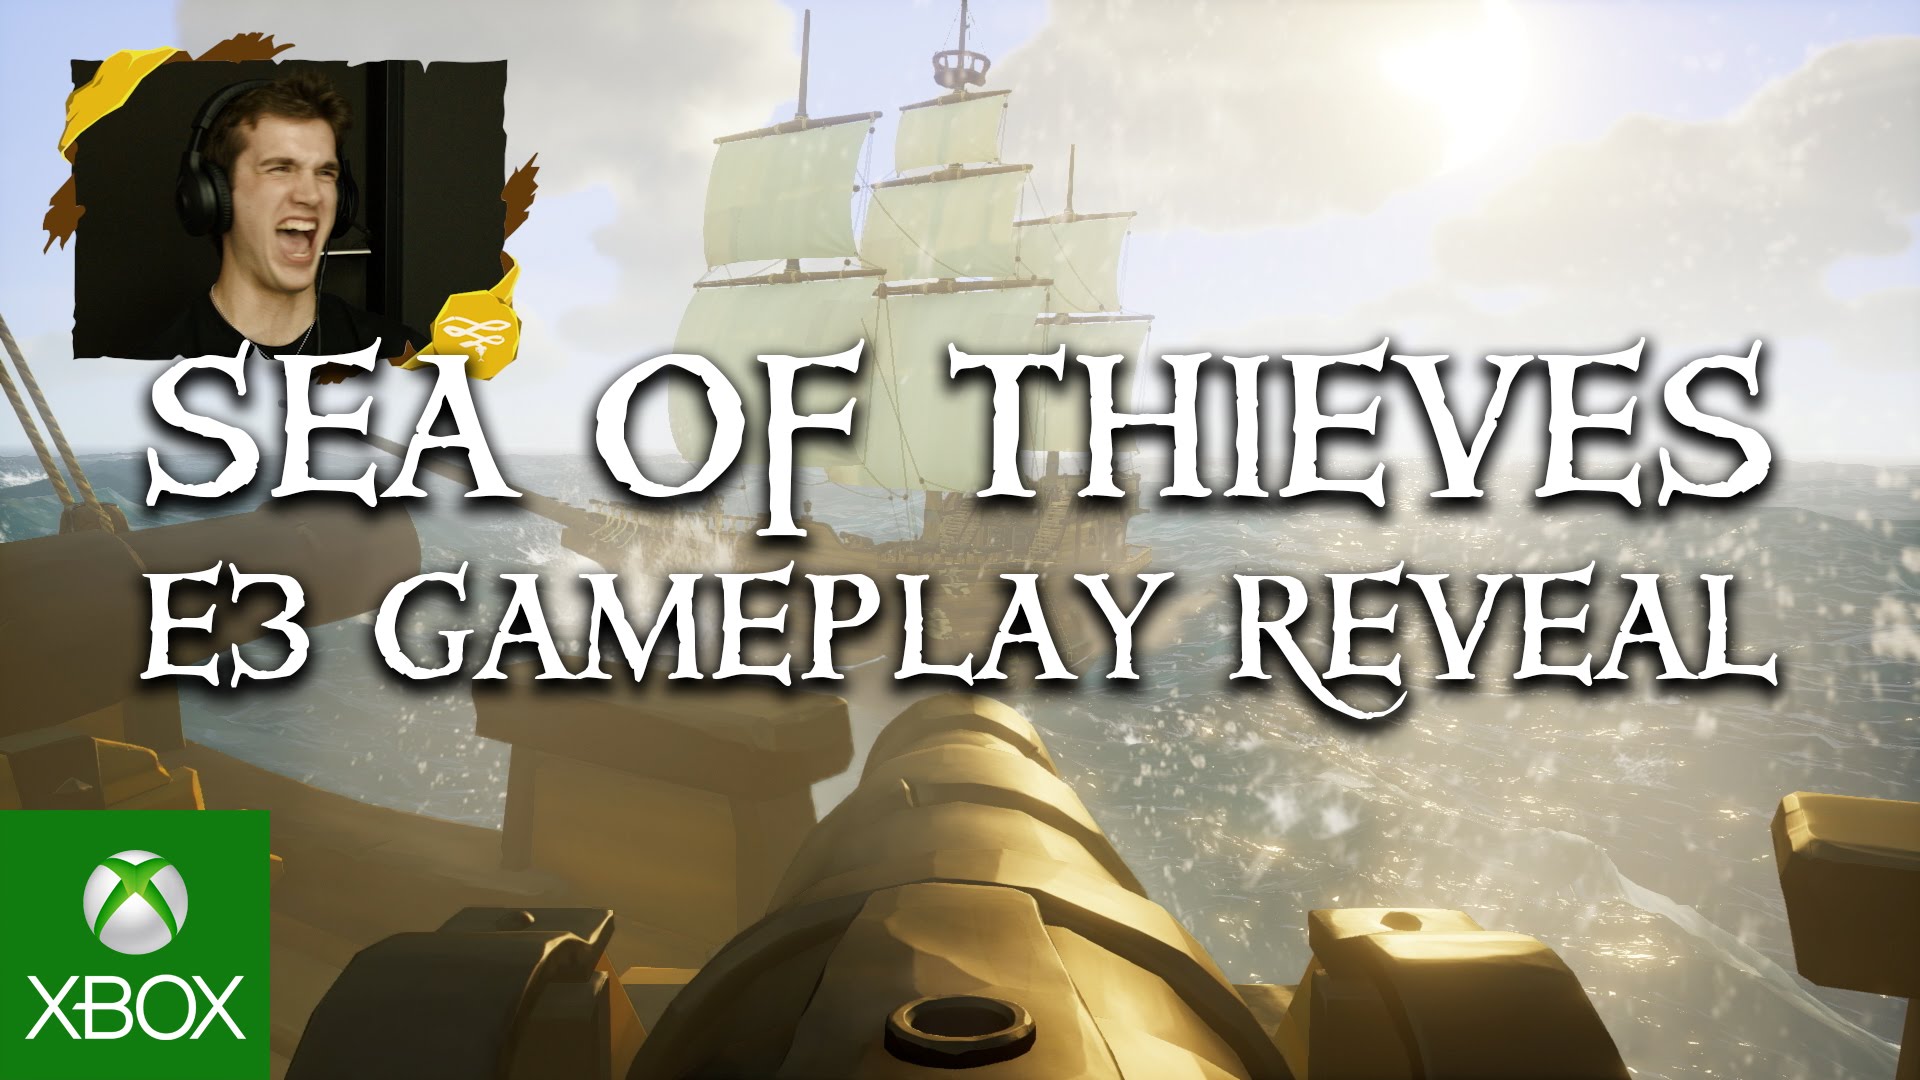 Sea of Thieves E3 2016 gameplay